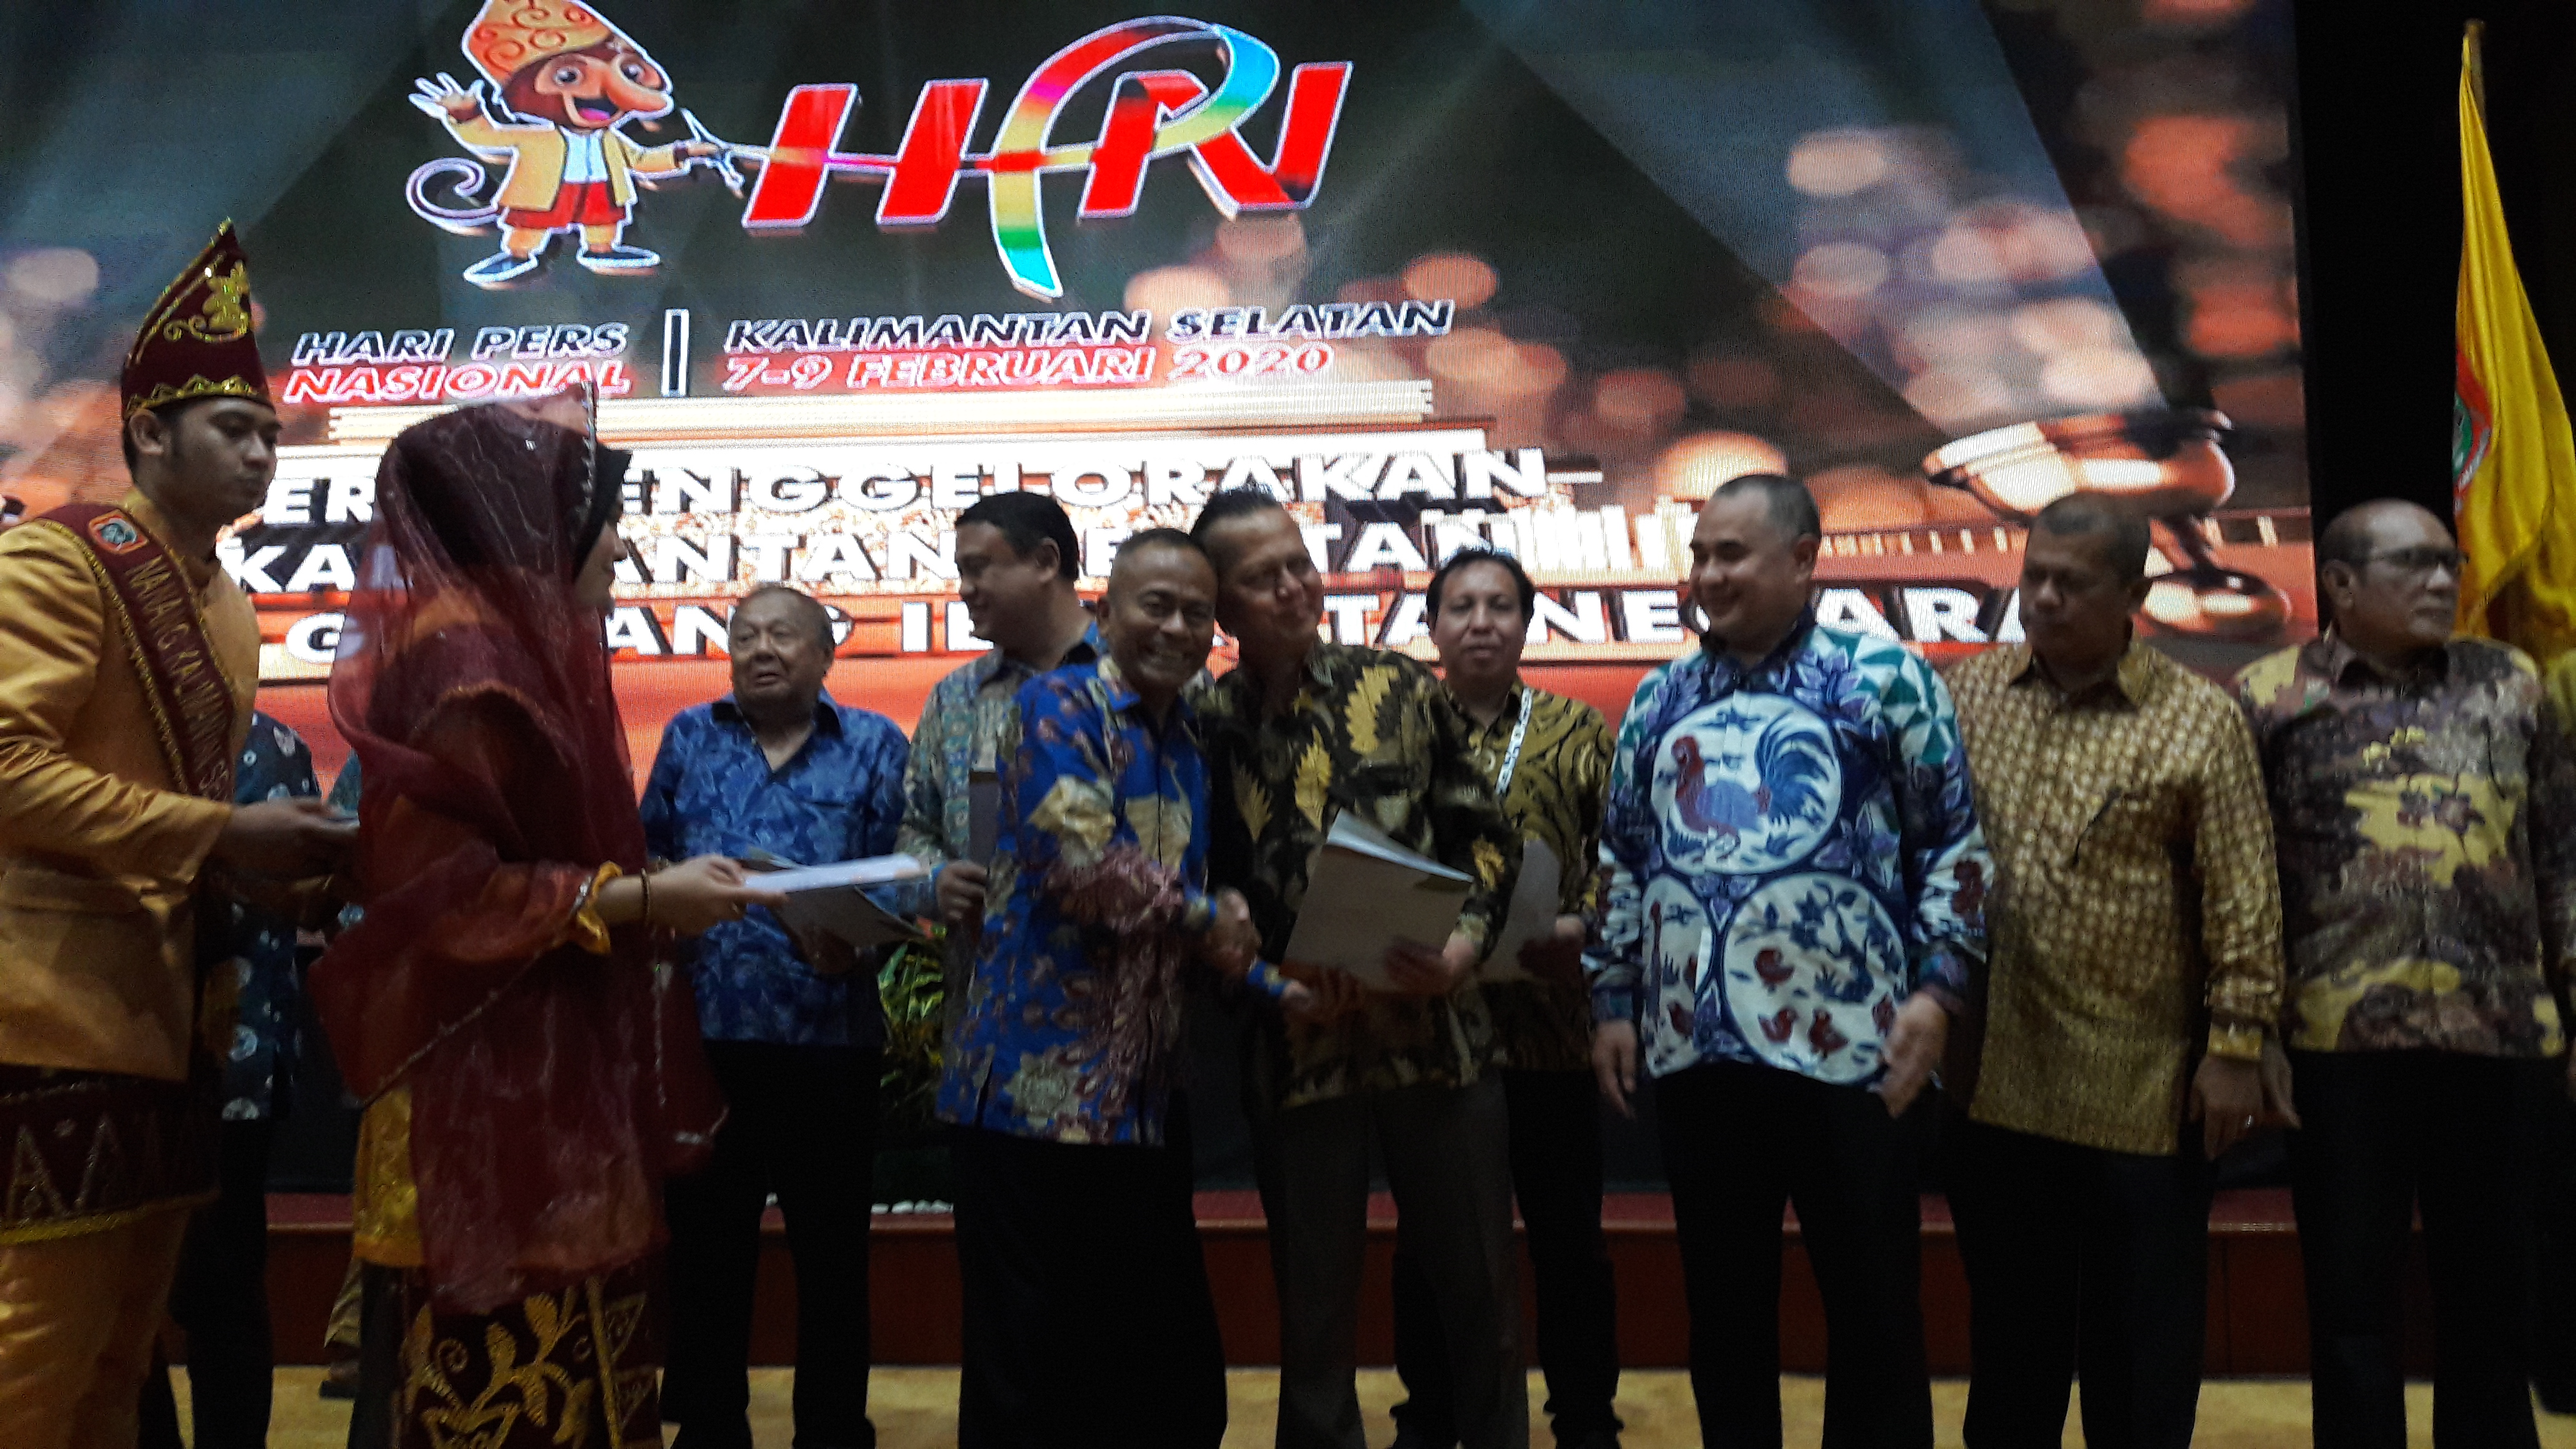  PCNO 17 Wartawan Senior di HPN Banjarmasin